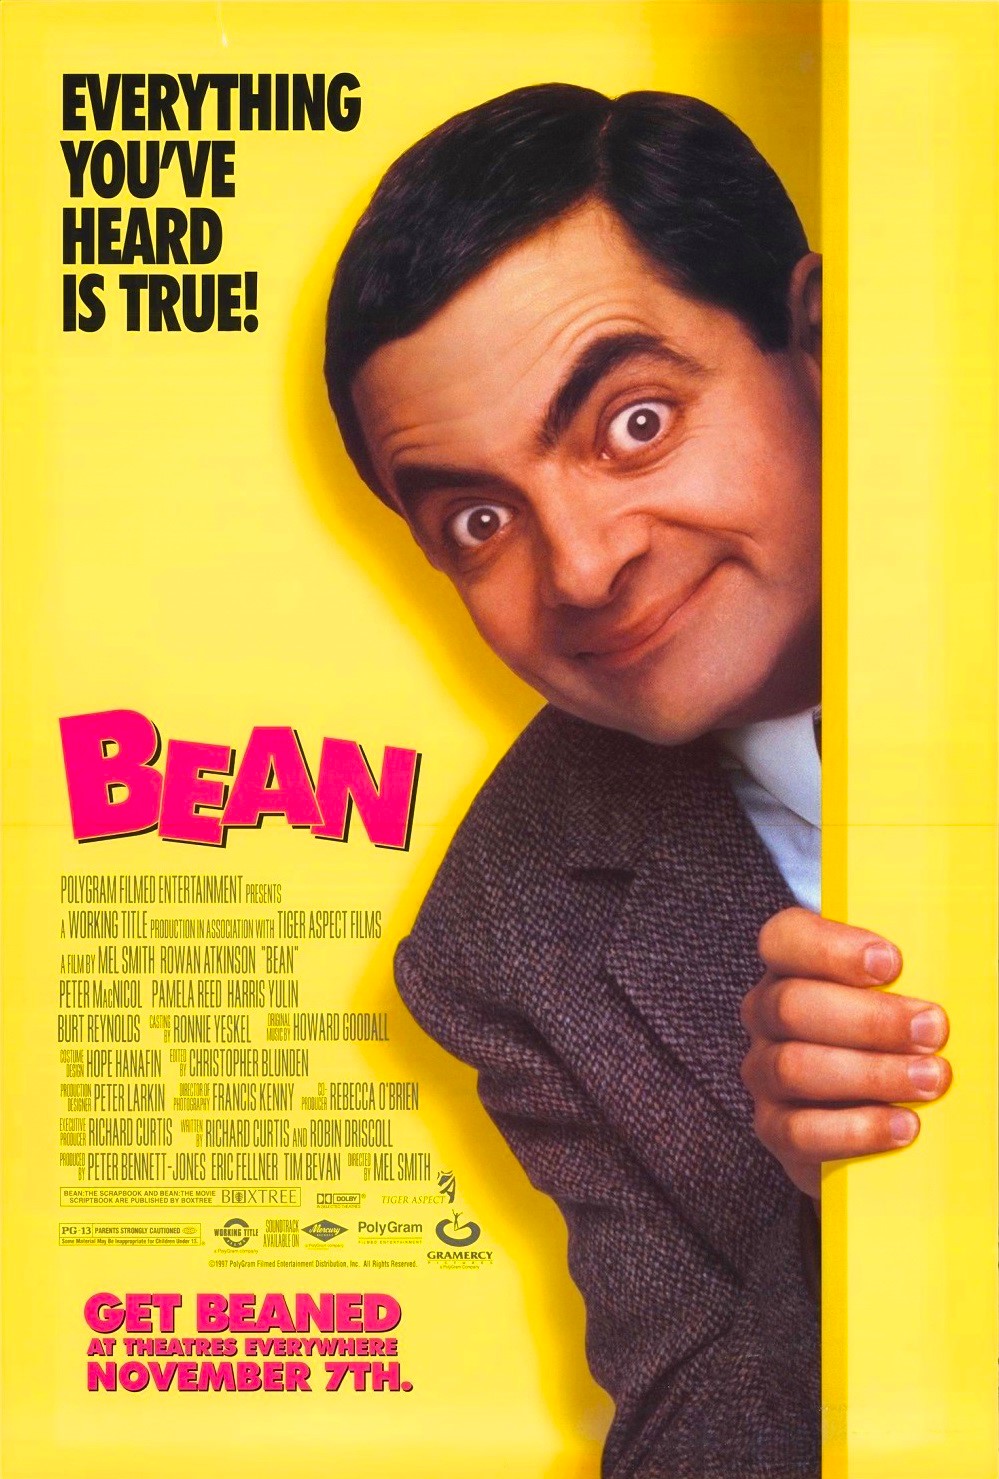 mr bean imdb